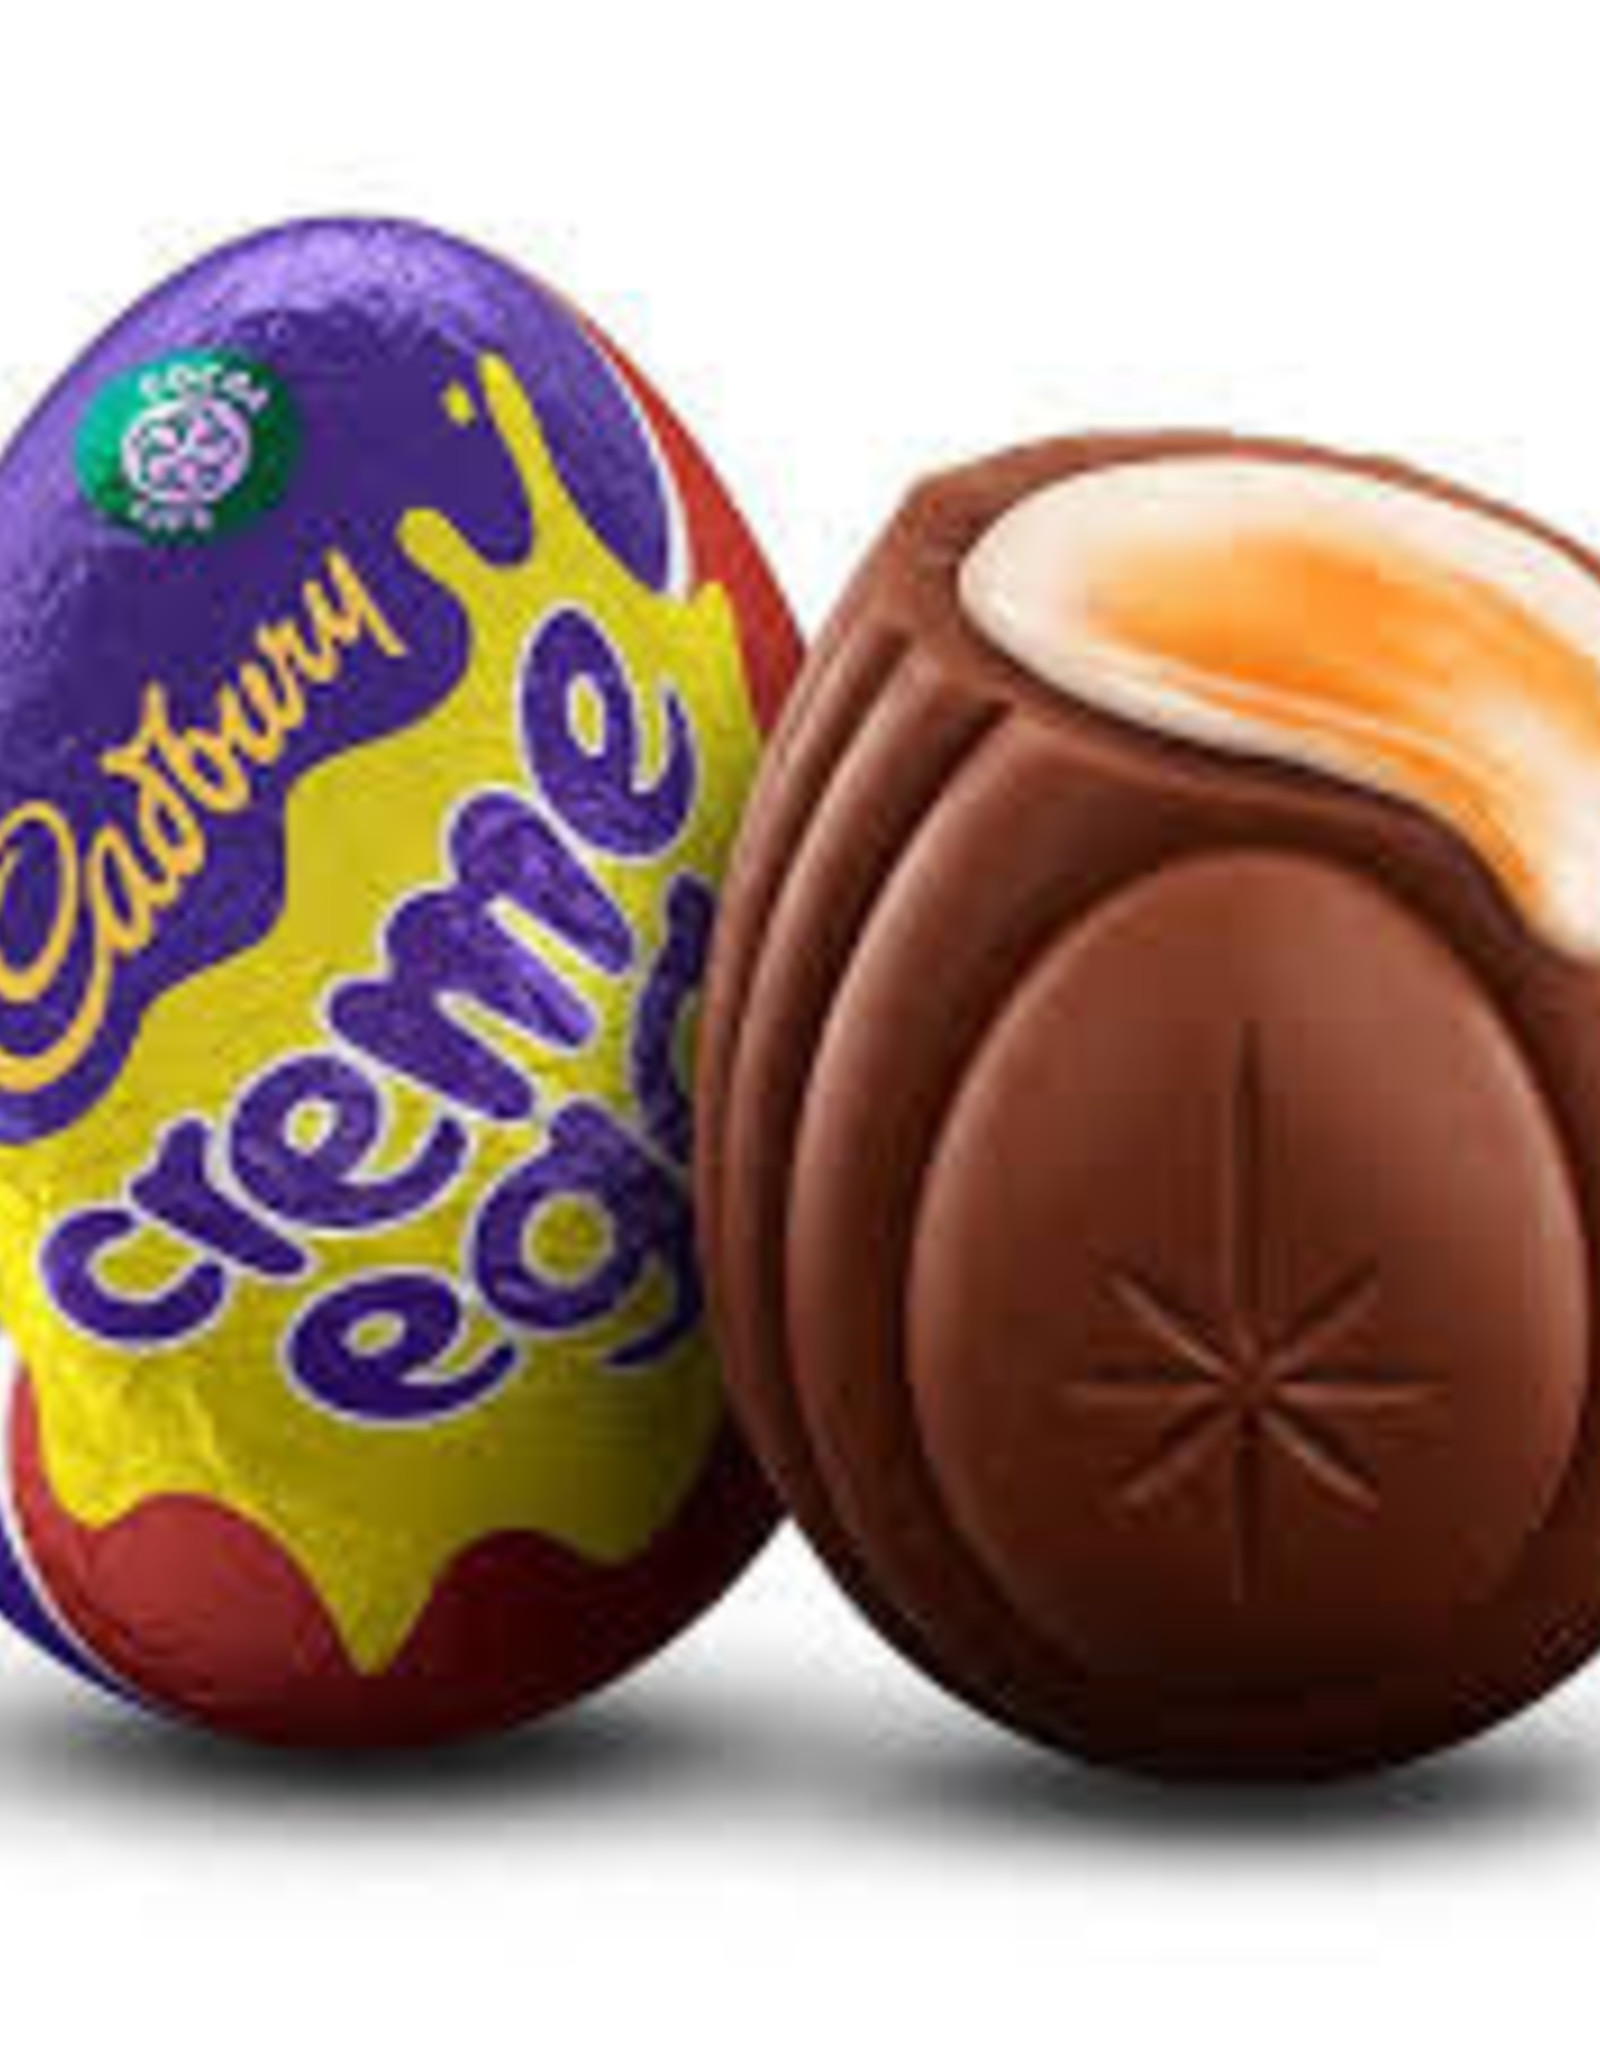 Cadbury Cadbury Creme Egg